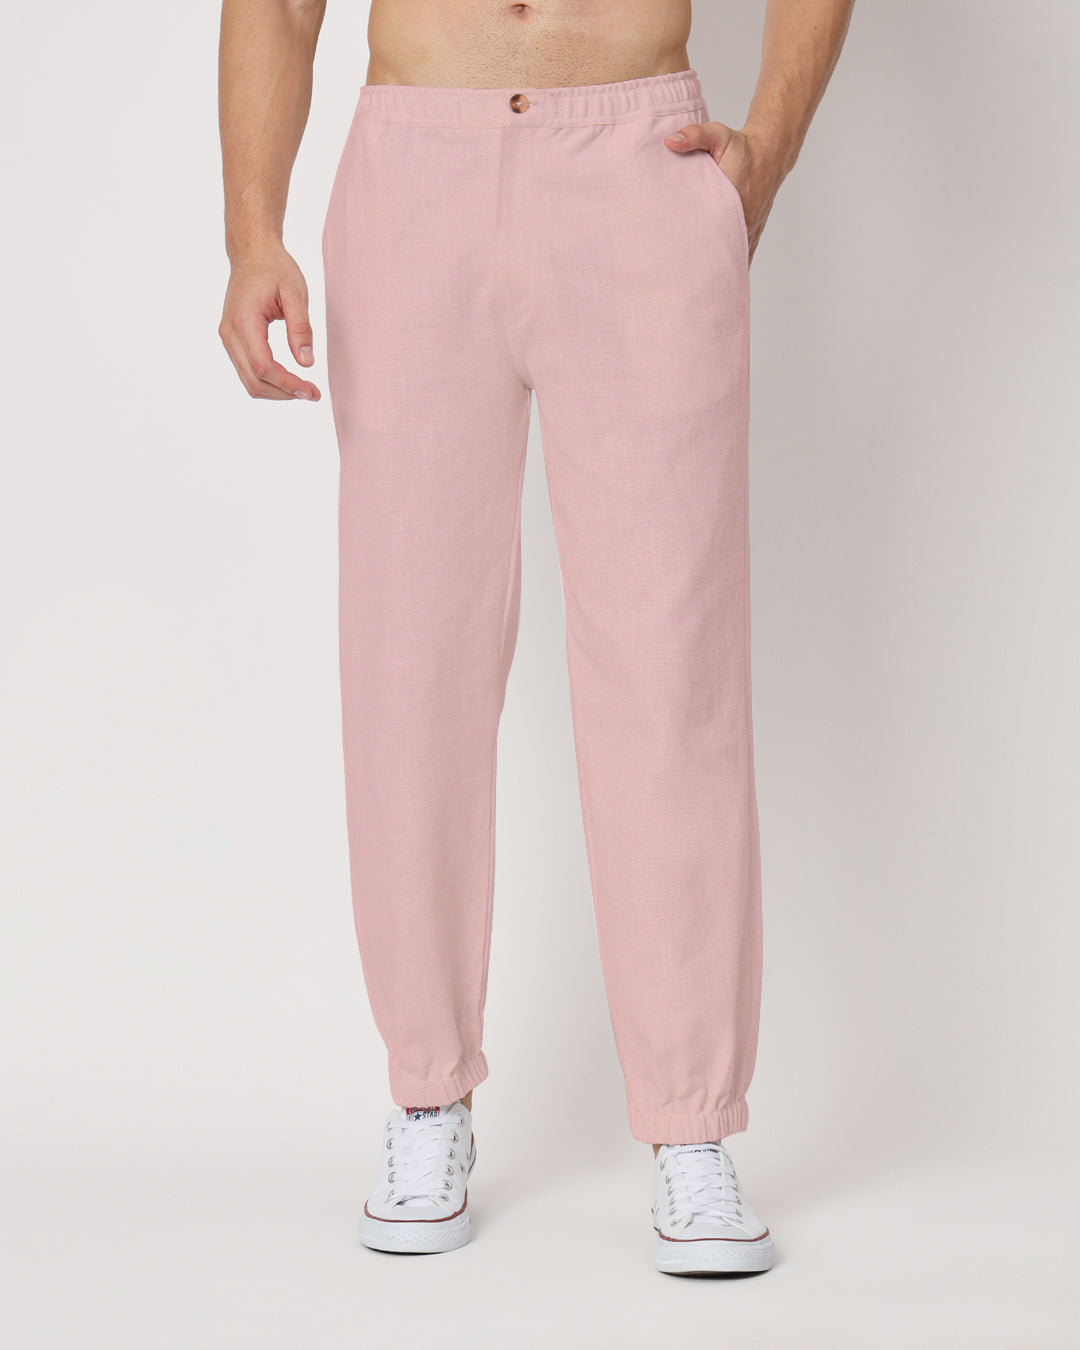 Combo: Beige & Fondant Pink Jog Men's Pants - Set of 2